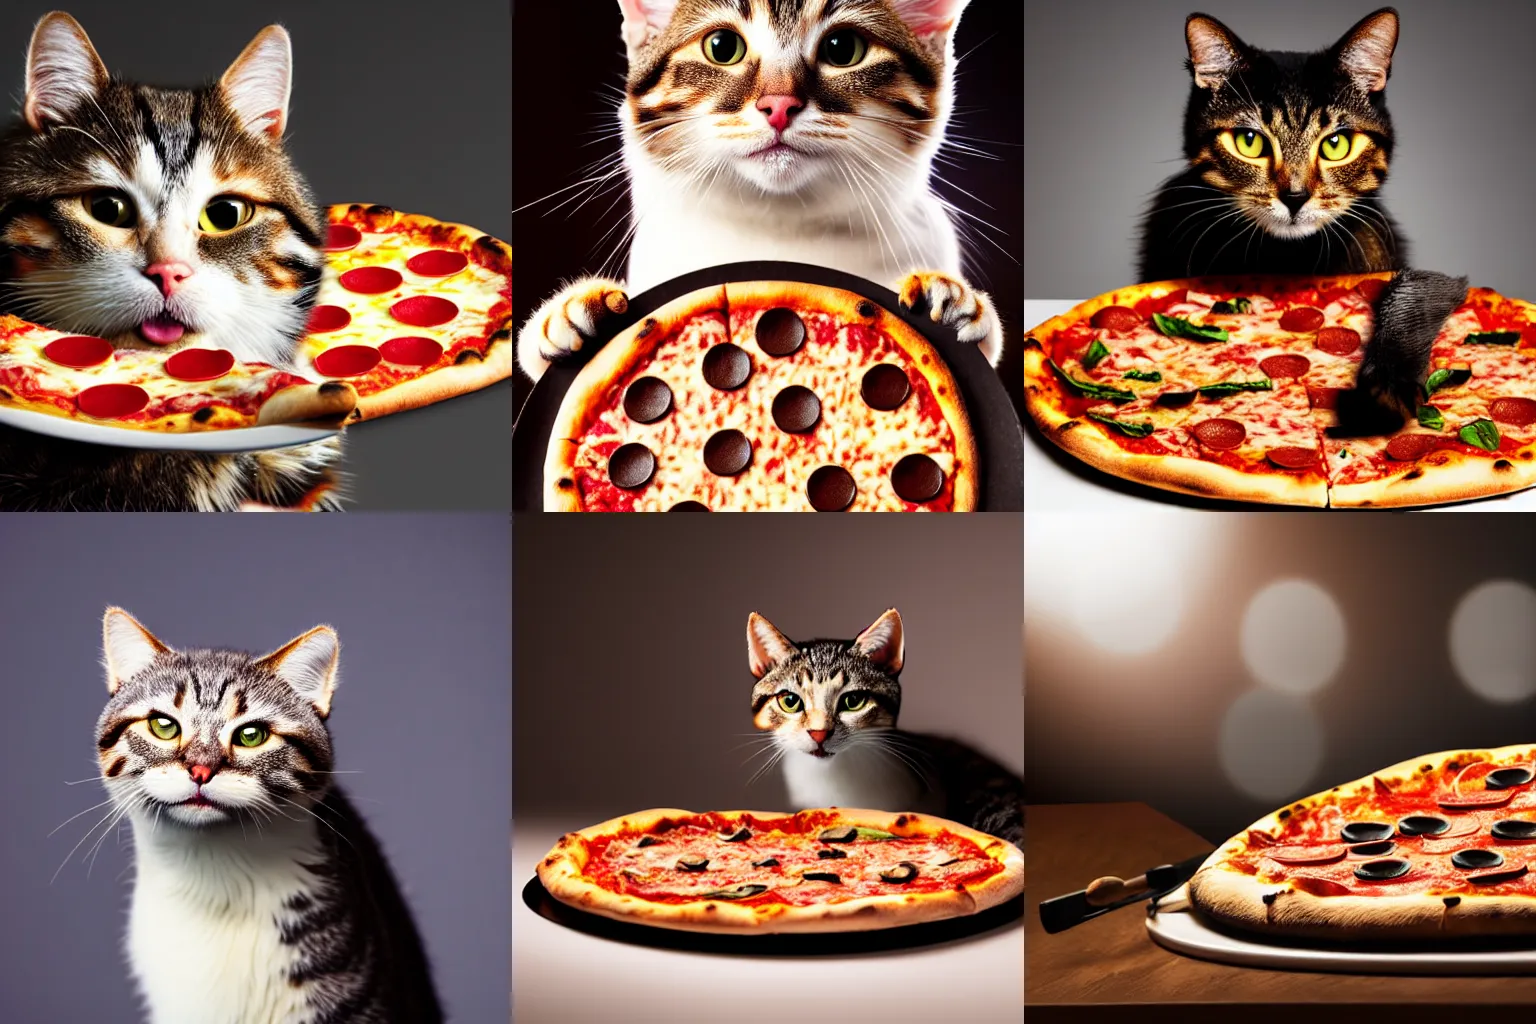 Prompt: a pizza cat, photorealistic, detaild, award winning, stock image, fur, goog lighting, pizza, cat